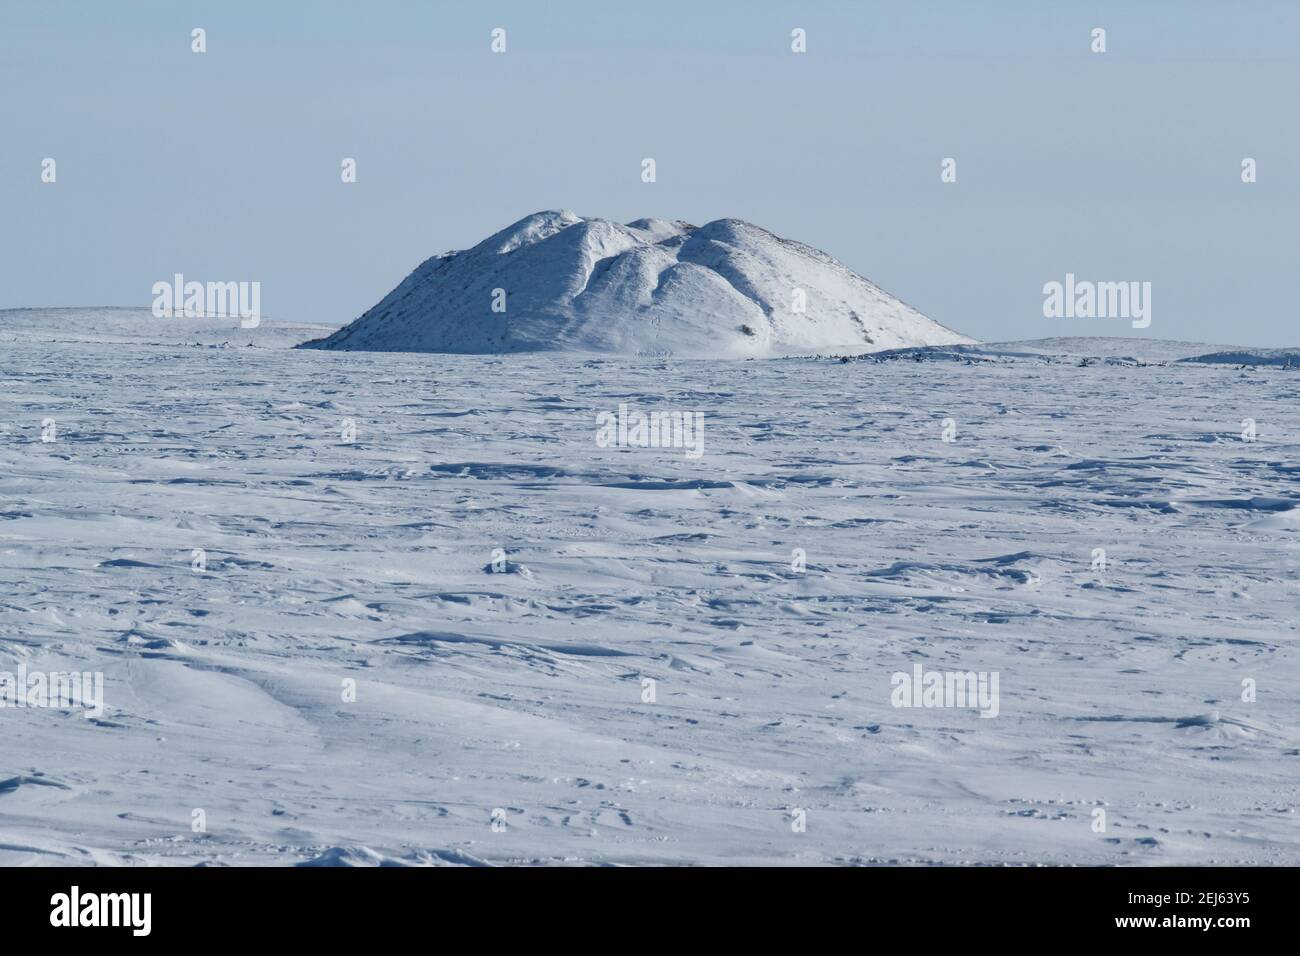 A pingo landmark (intra-permafrost ice-cored hill) in winter on the frozen arctic landscape near Tuktoyaktuk, Northwest Territories, Canada Stock Photo